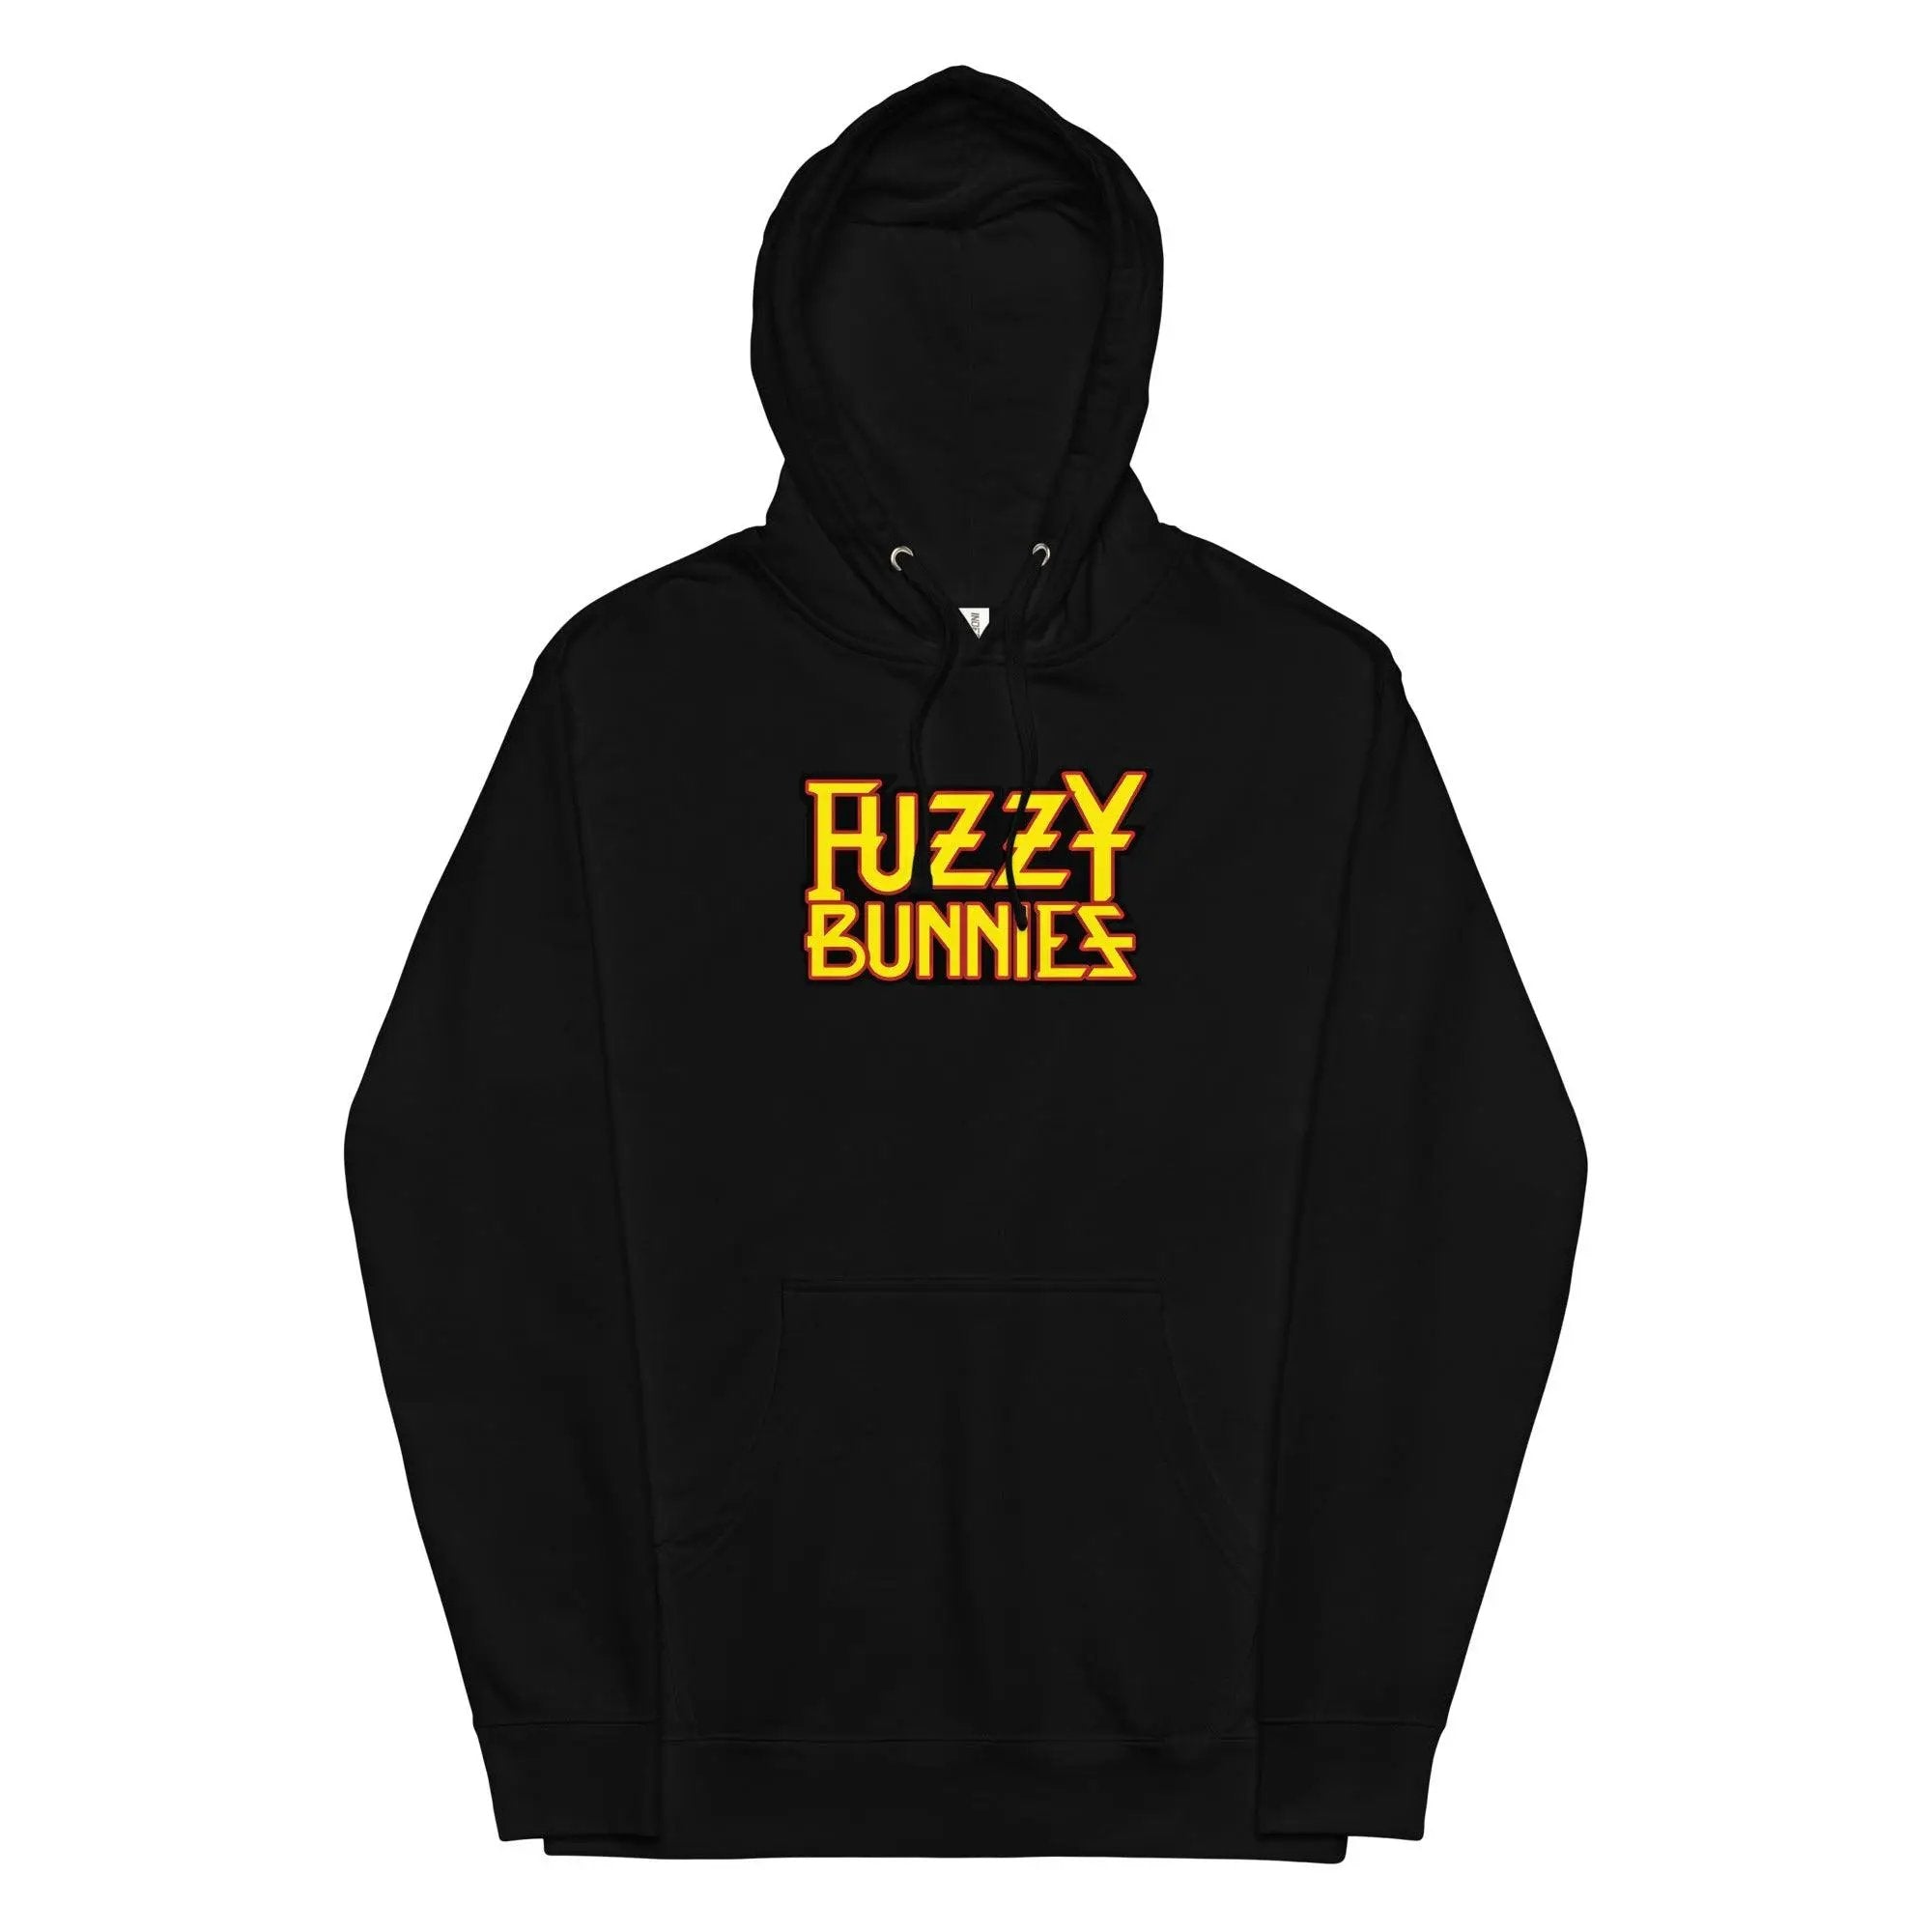 Fuzzy Bunnies Midweight hoodie